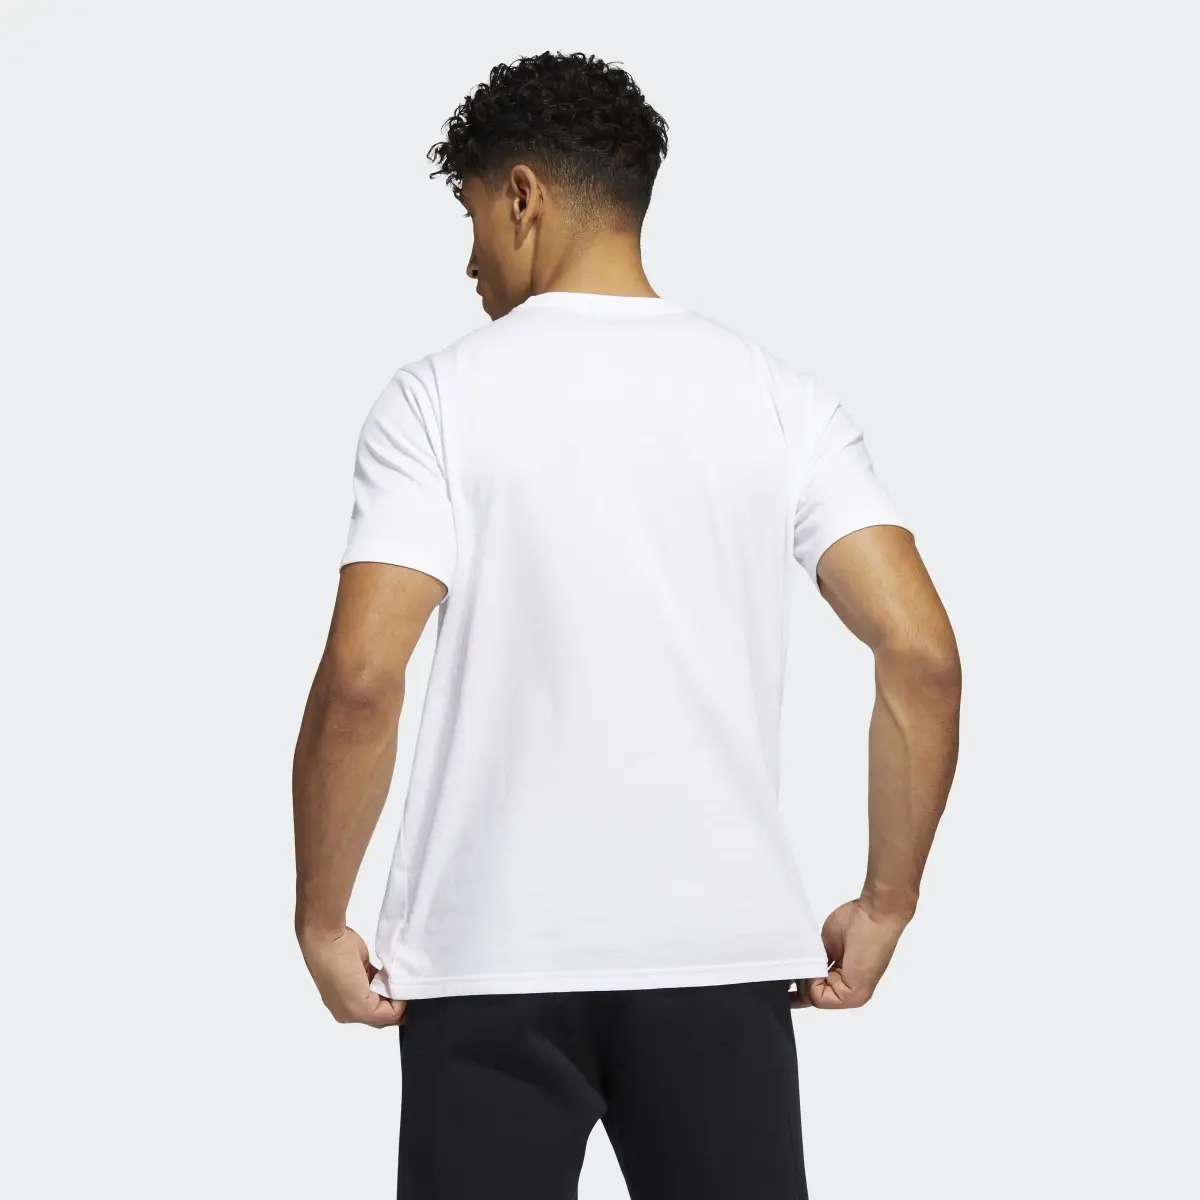 Adidas T-shirt Multiplicity. 3